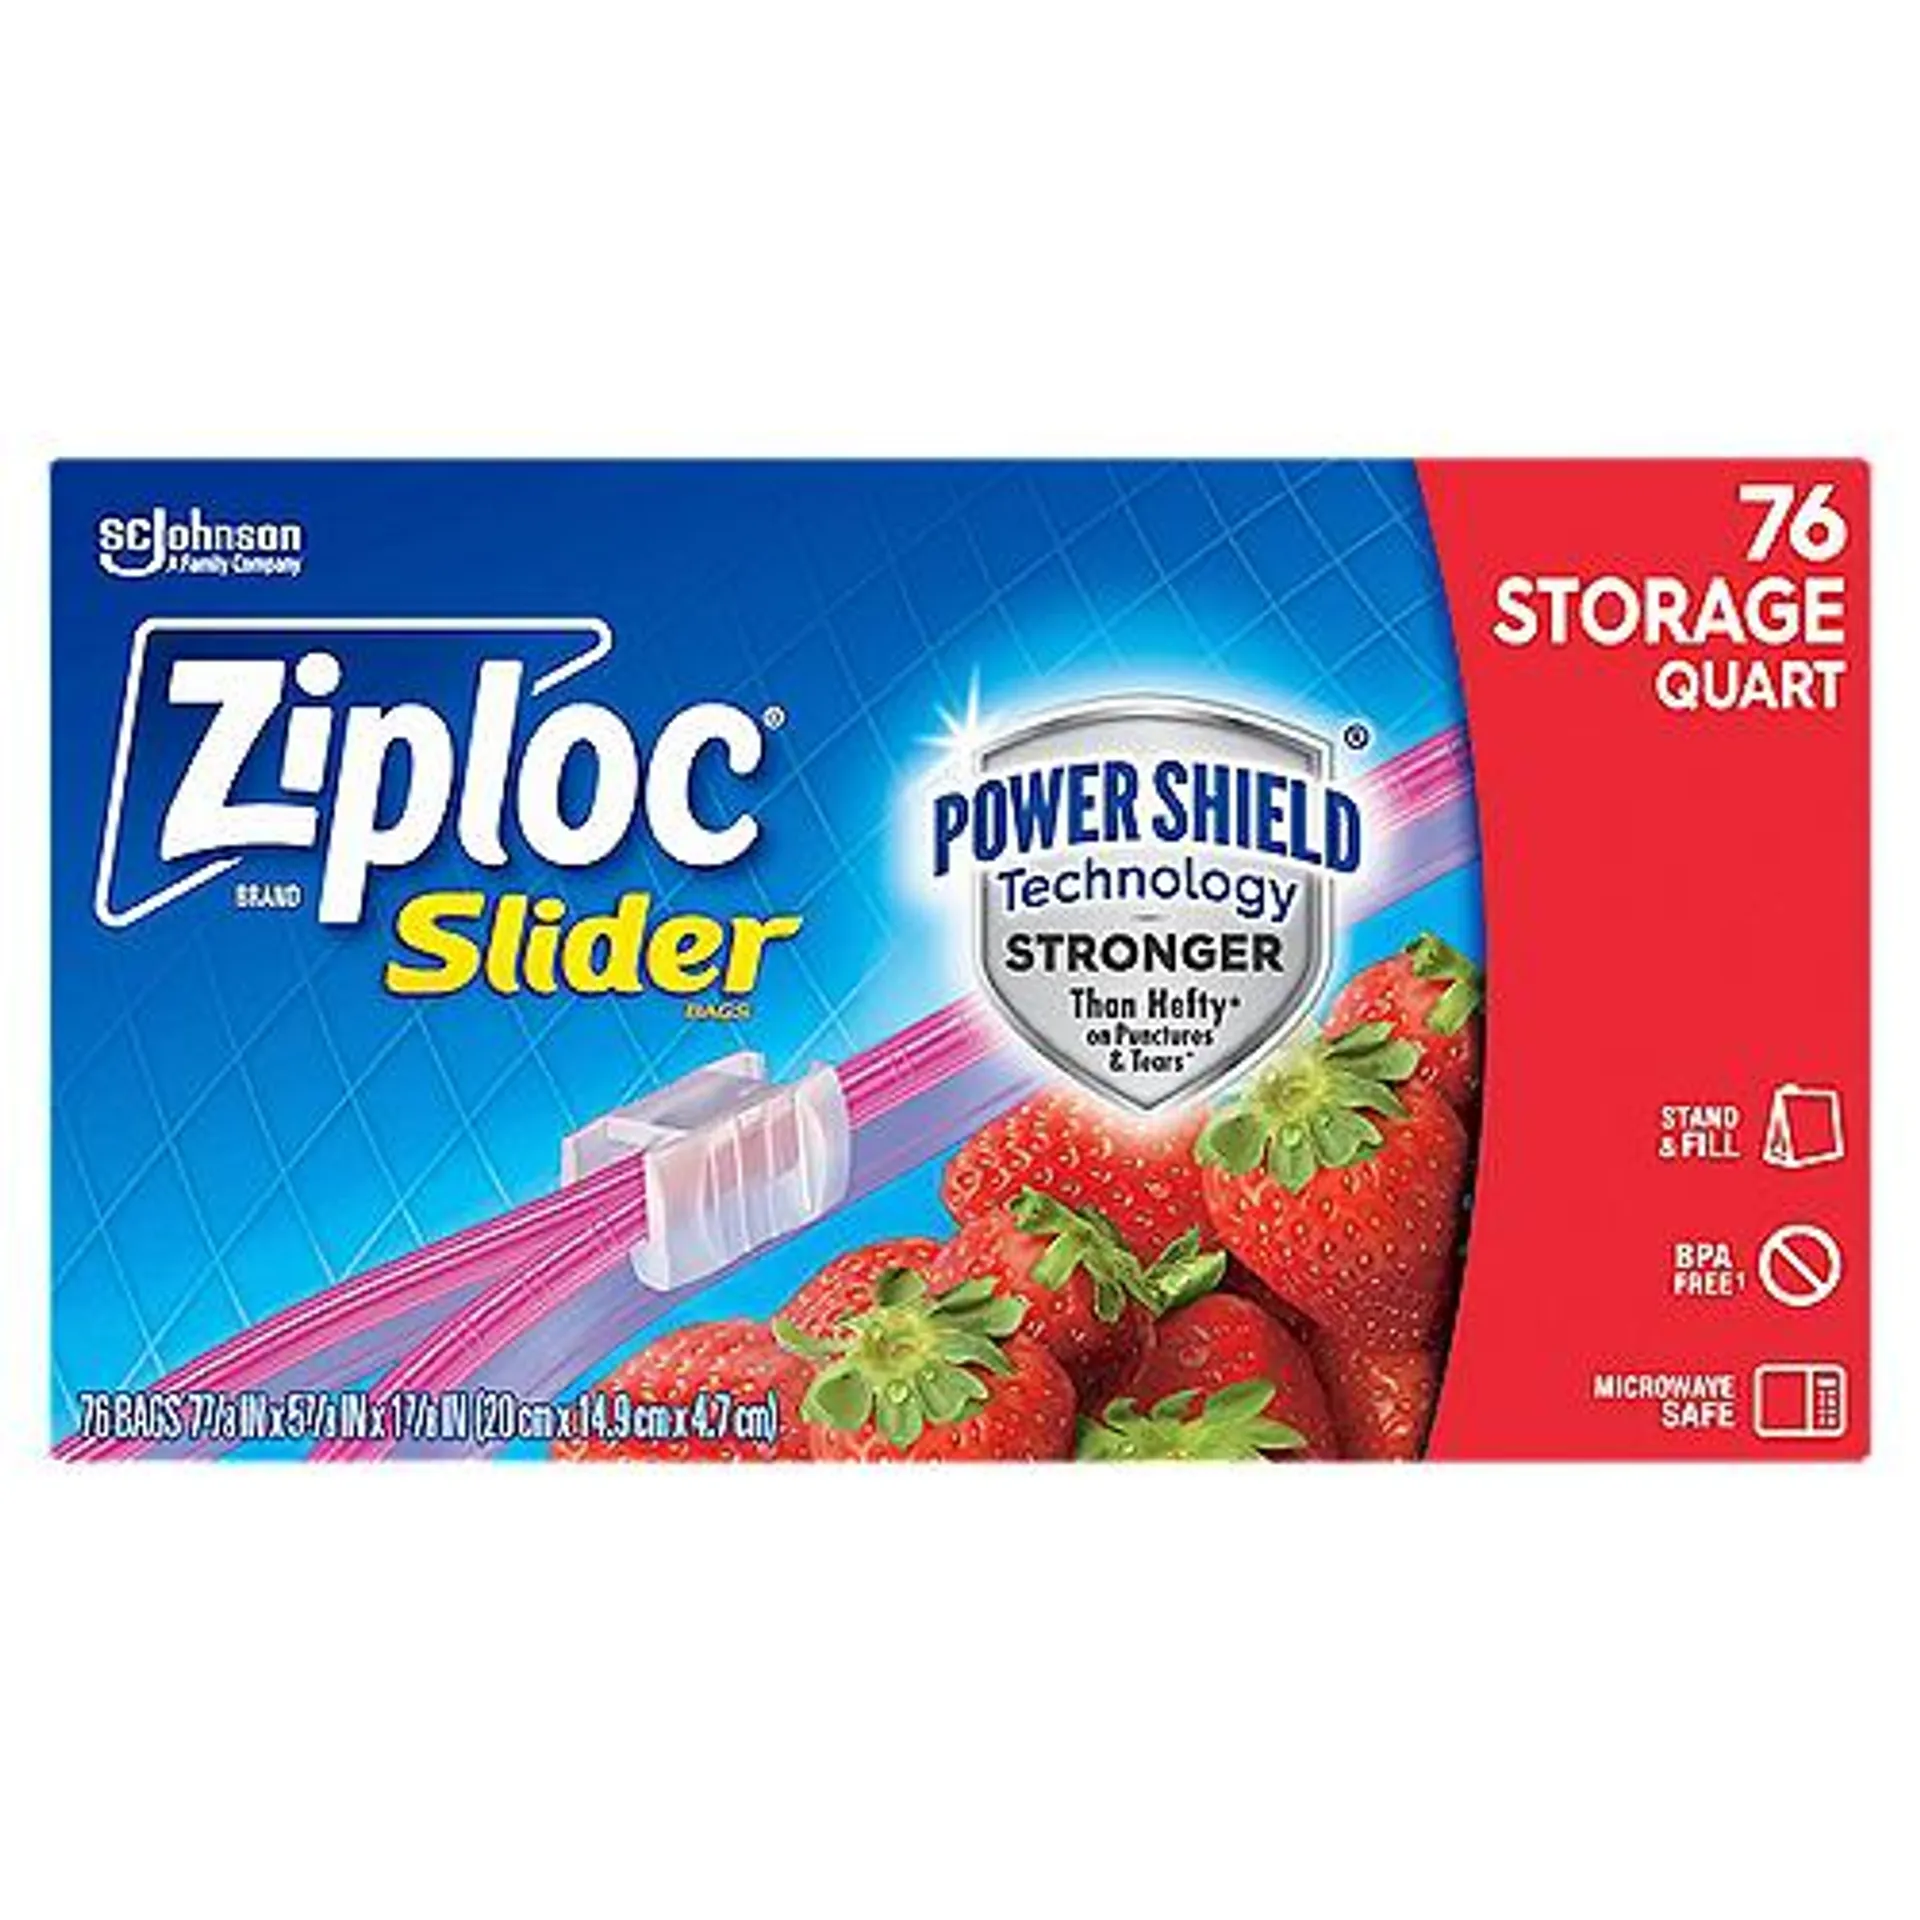 Ziploc® Brand Slider Storage Bags with Power Shield Technology, Quart, 76 Count